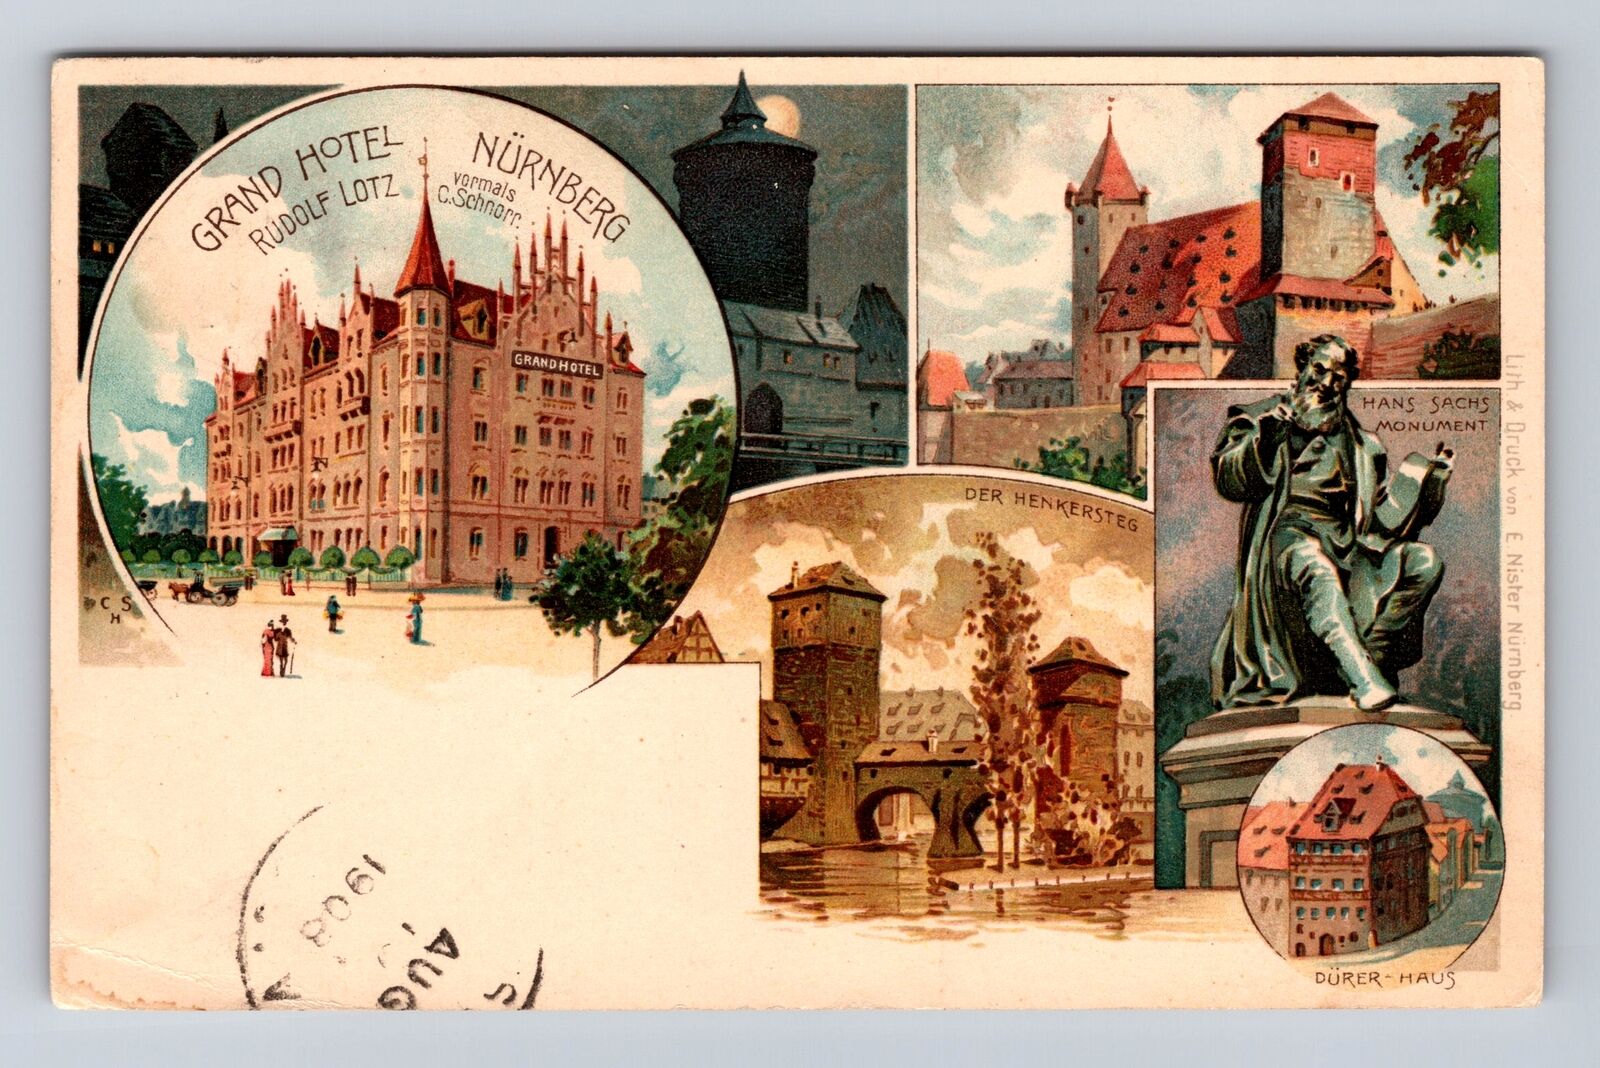 Nurnberg Germany, Grand Hotel Rudolf Lotz Der Henkersteg, Vintage c1908 Postcard